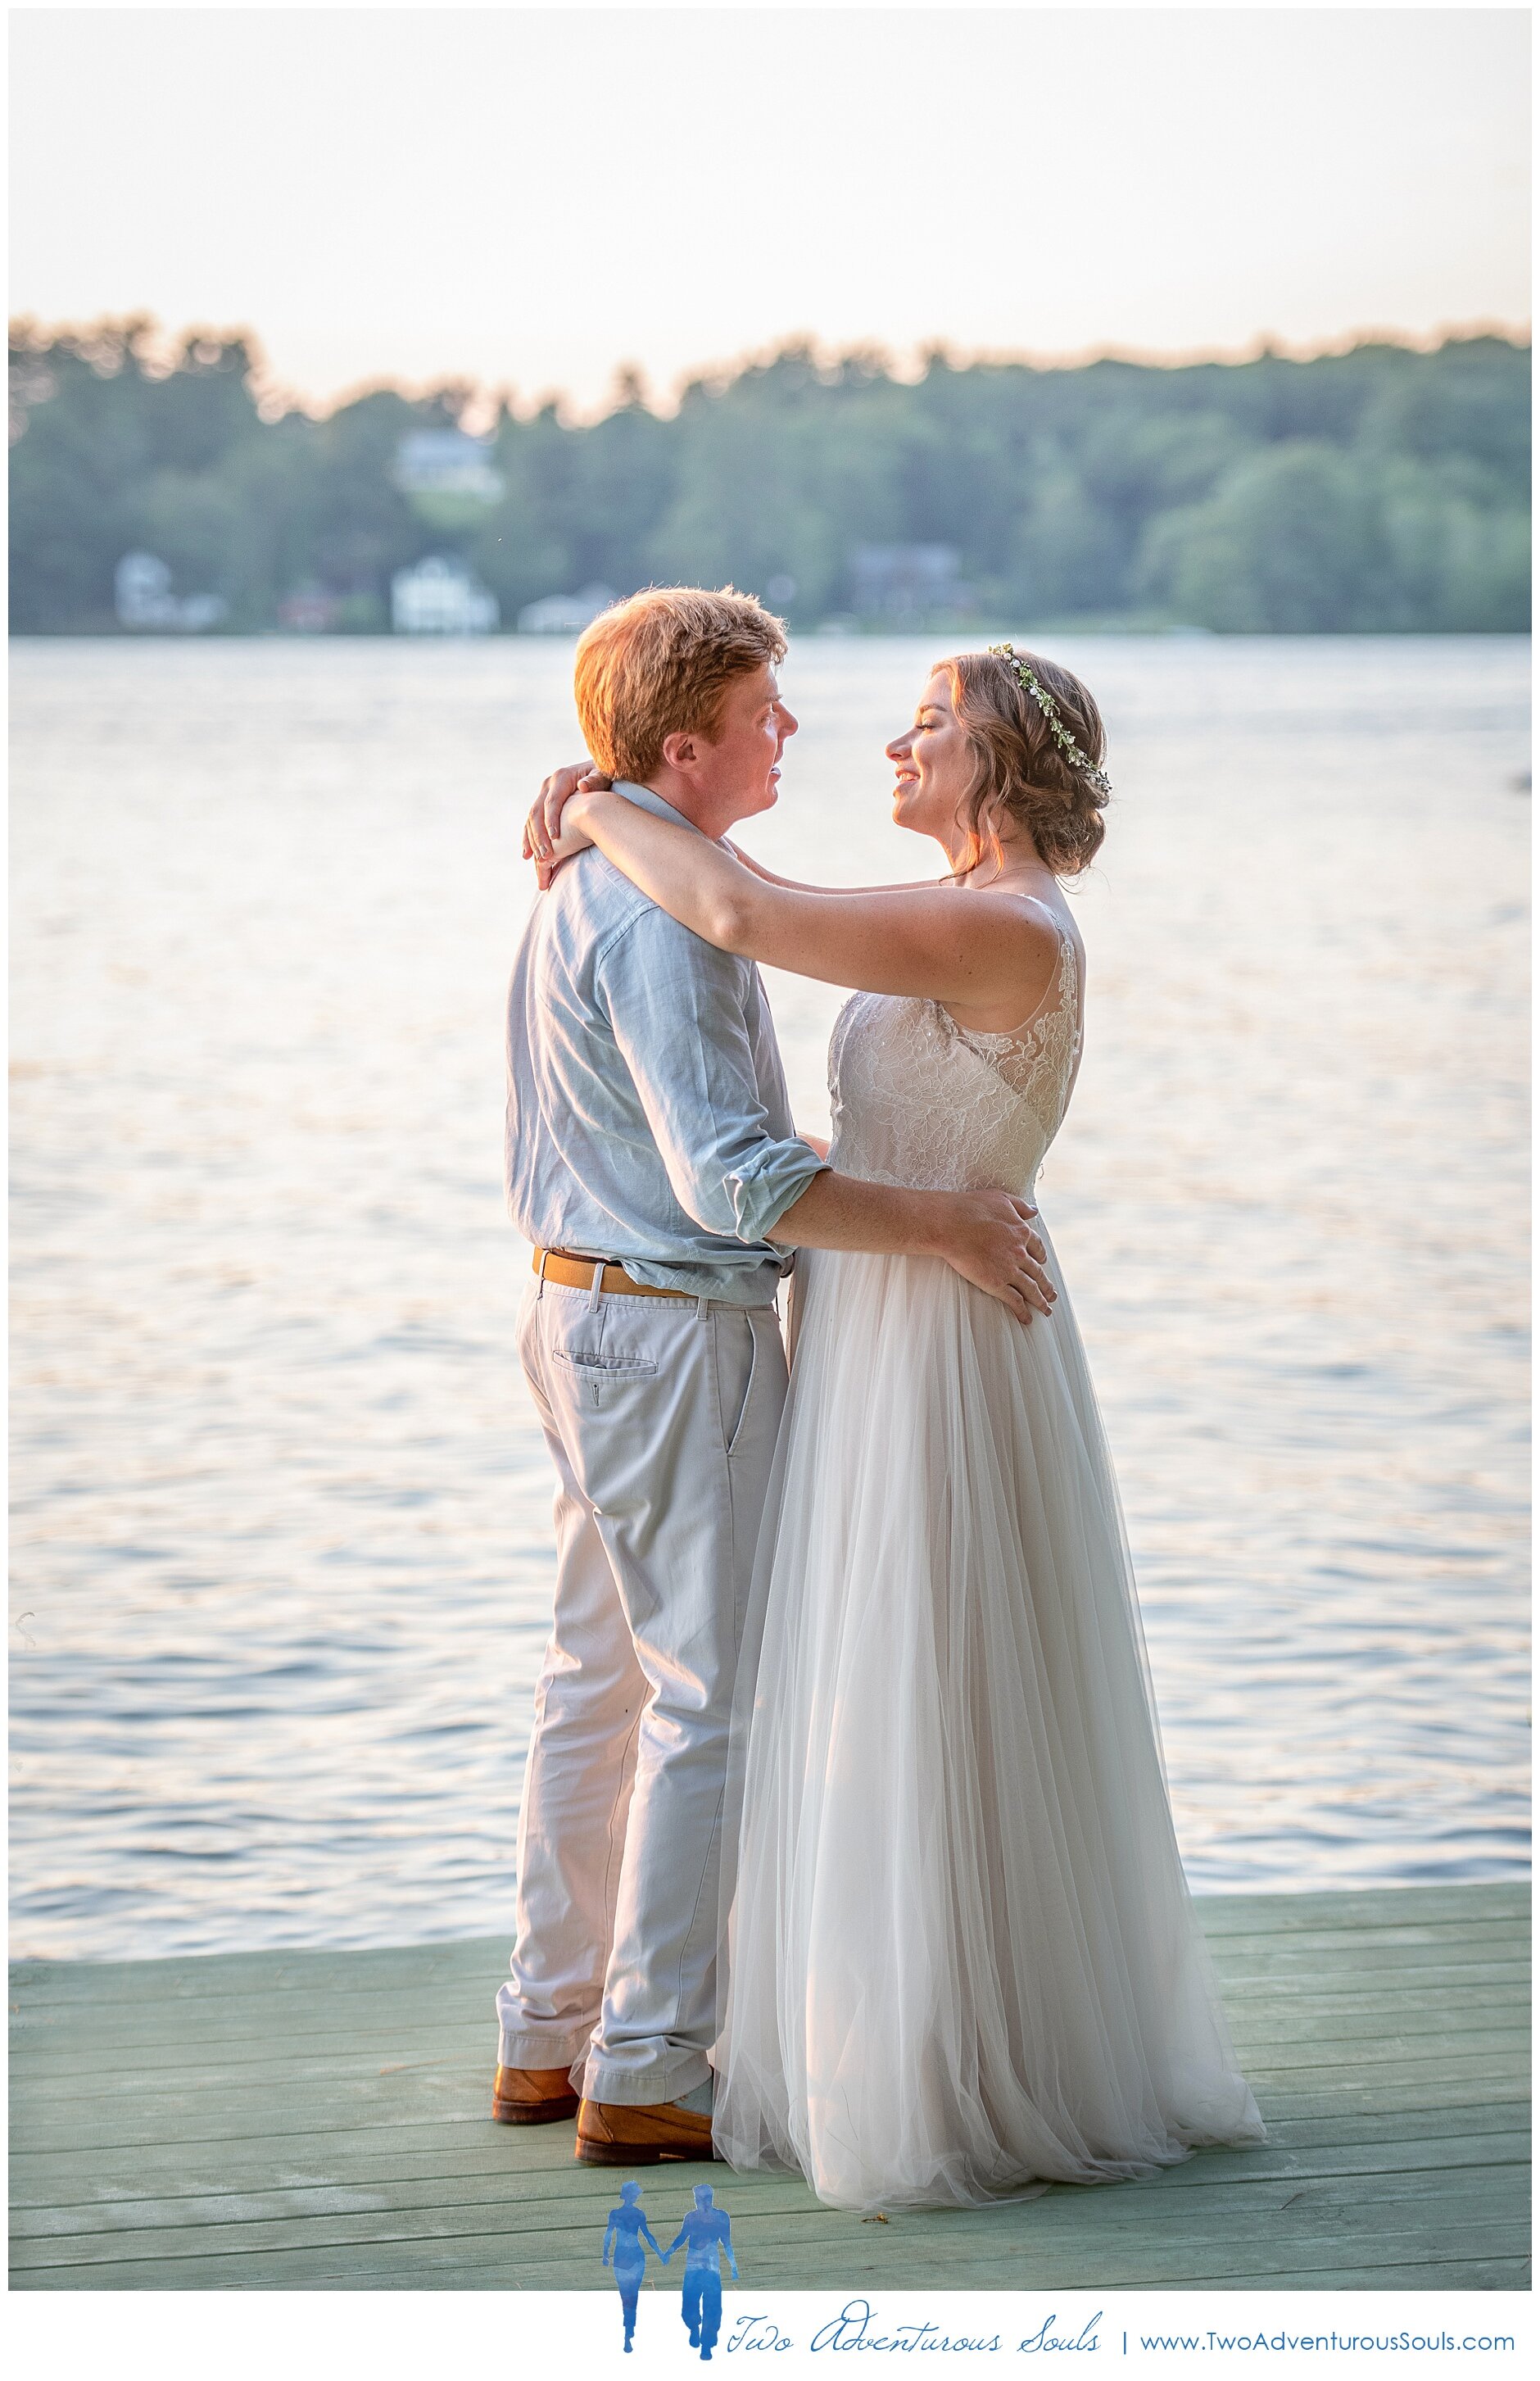 Lake Cobbosseeconte Wedding, Manchester Maine, Maine Lake Wedding Photographer, Two Adventurous Souls - 080820_0036.jpg